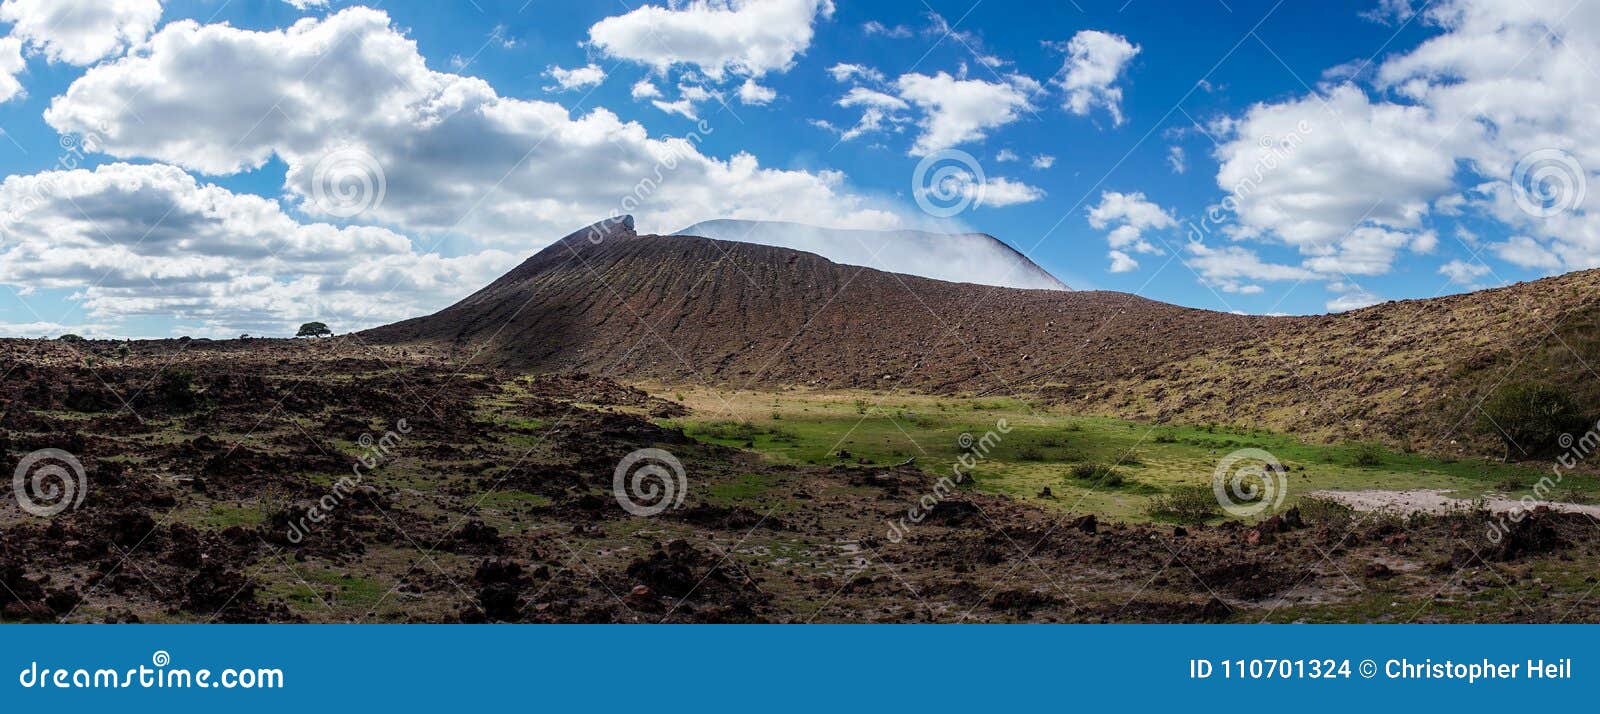 telica stratovolcano panorama in nicaragua.